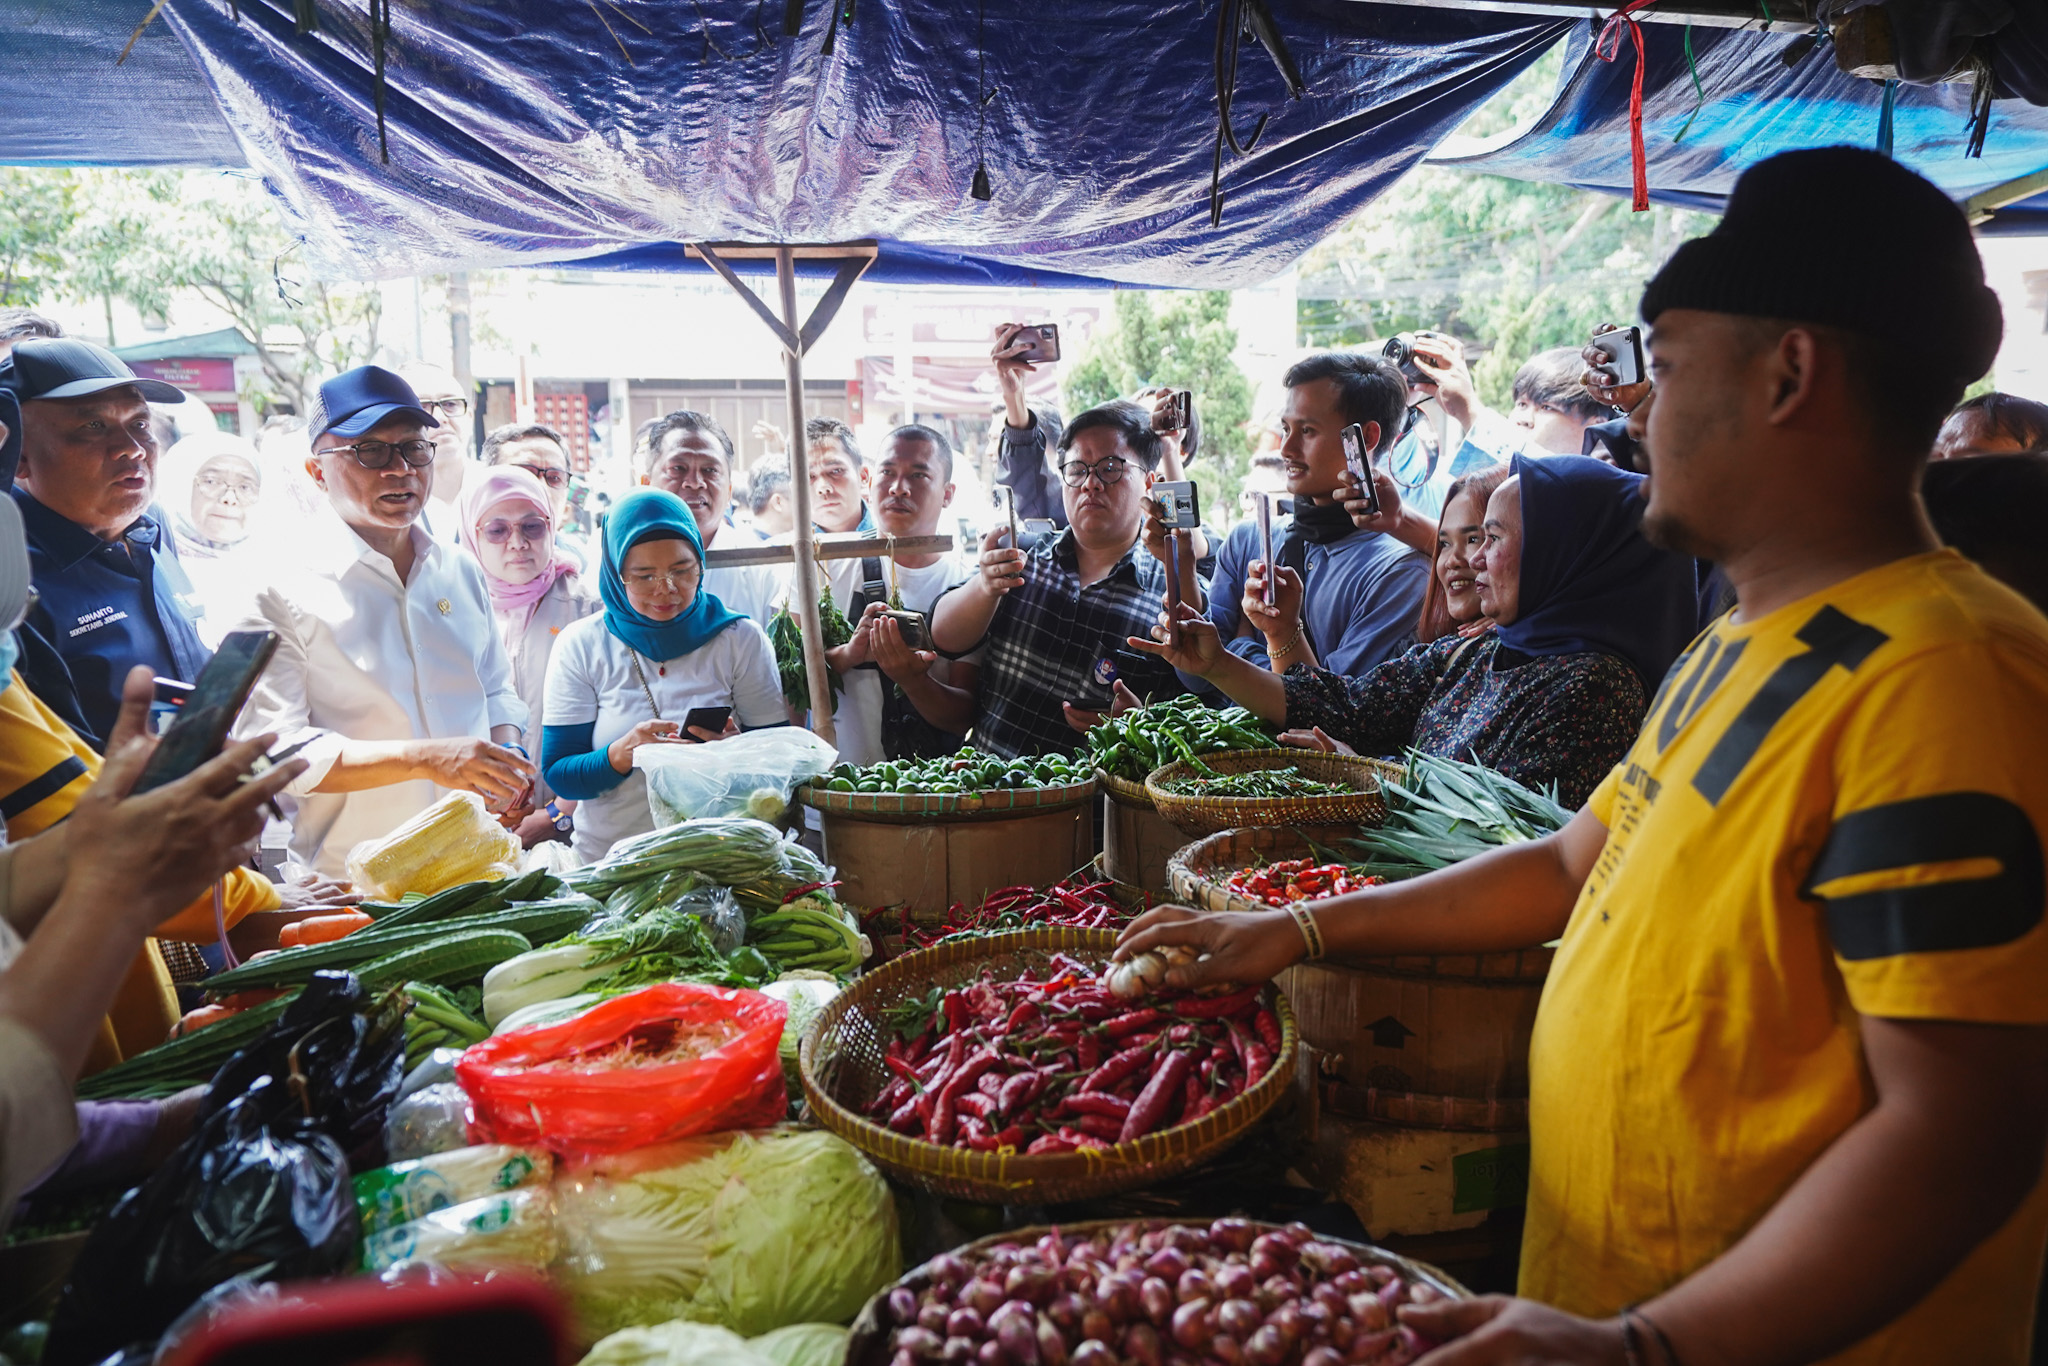 Menteri Perdagangan, Zulkifli Hasan meninjau ketersediaan stok dan stabilitas harga barang kebutuhan pokok (bapok) di Pasar Sederhana, Bandung, Jawa Barat, Rabu (27 Sep).